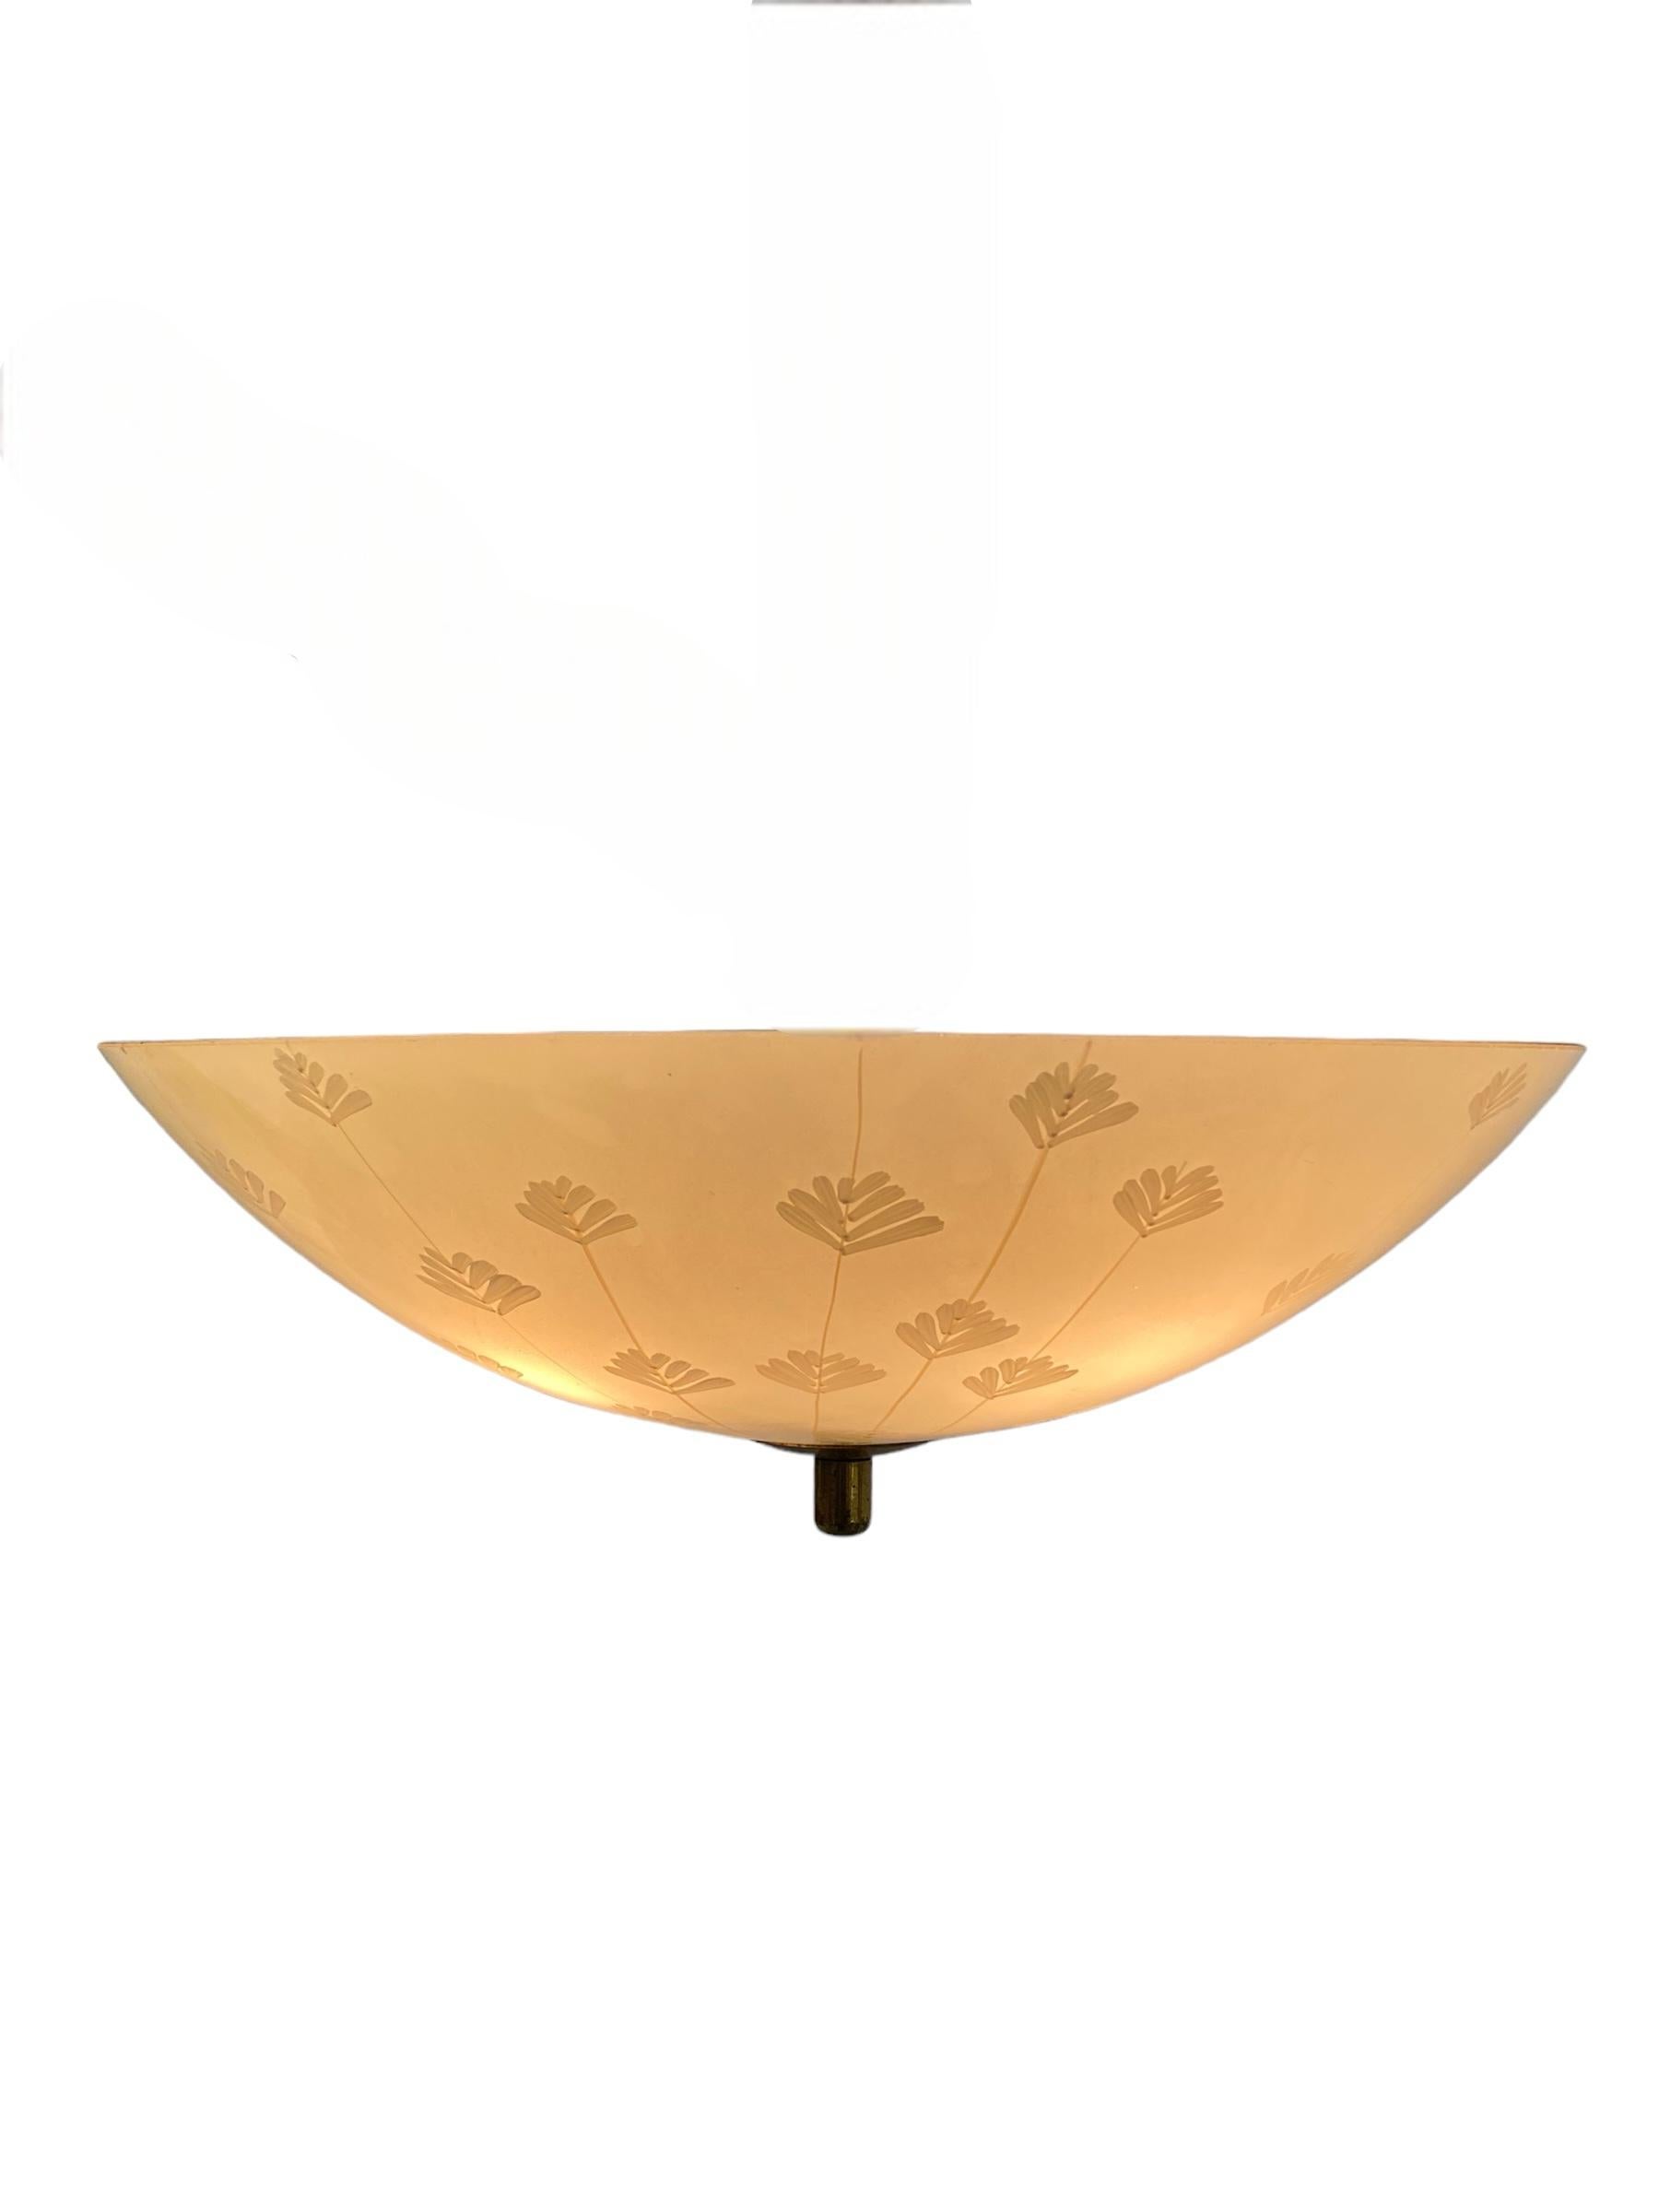 Scandinavian Modern Lisa Johansson-Papé Hand-Painted Ceiling Lamp, Orno 1950s For Sale